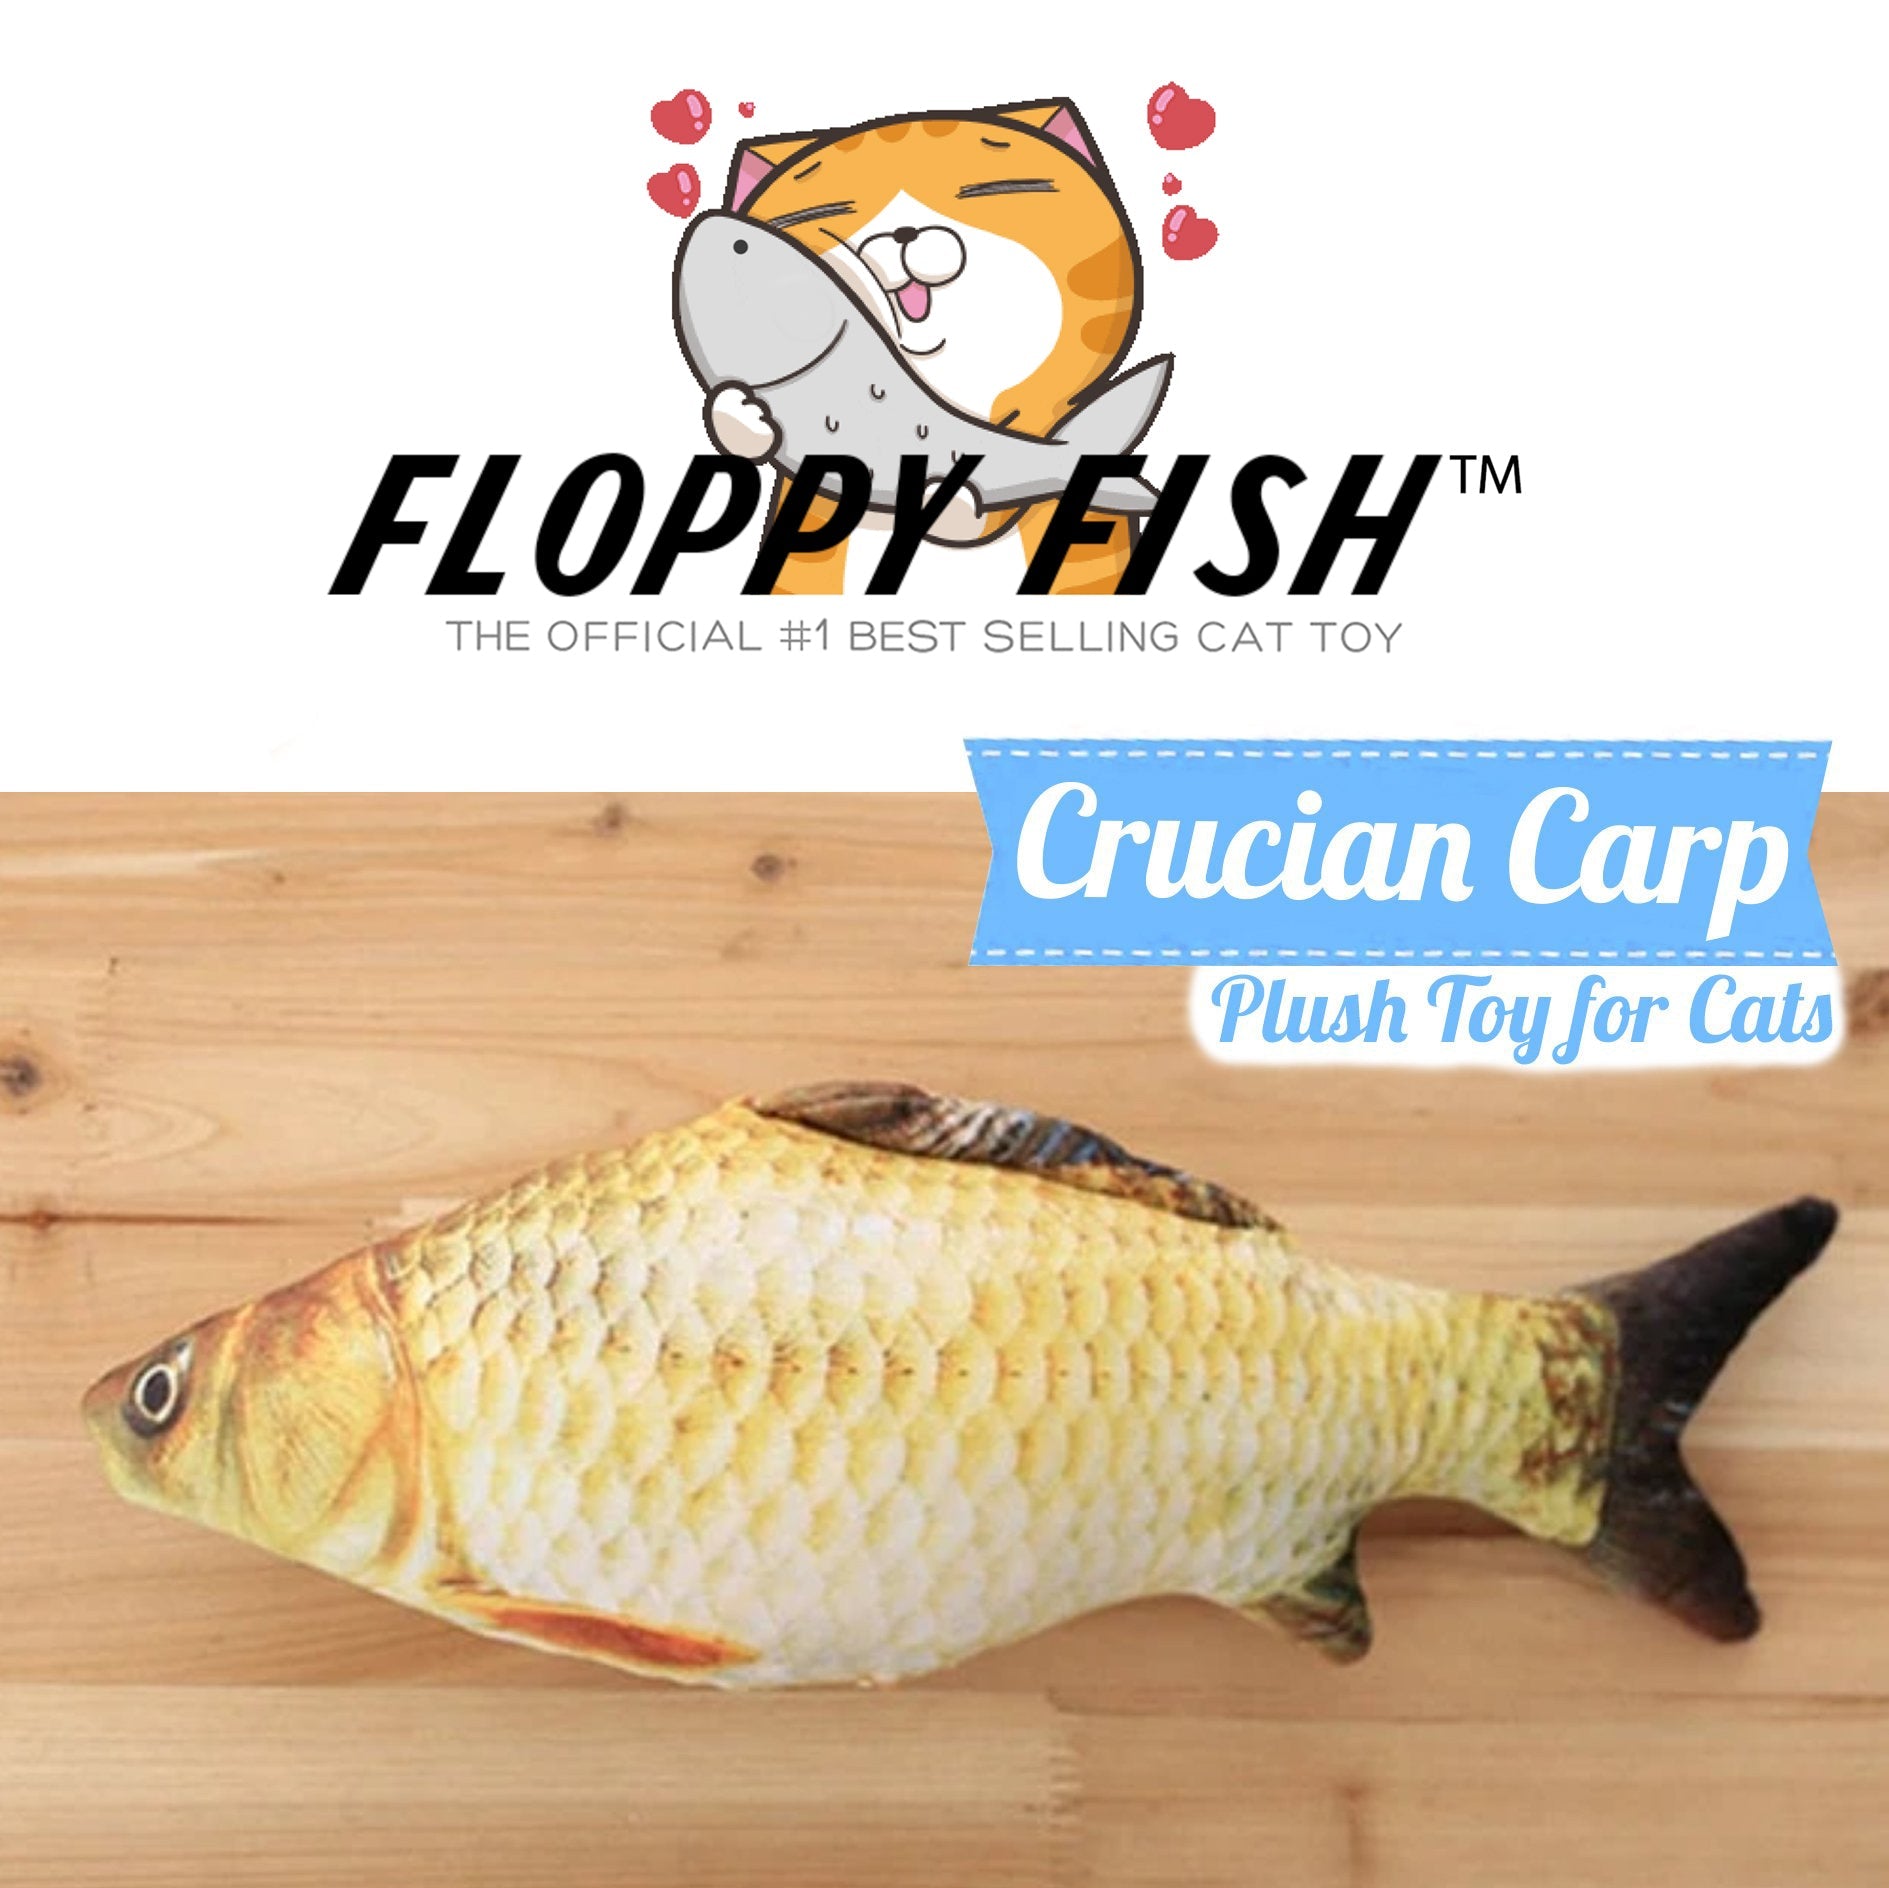 Original Floppy Fish Plush Toy For Cats, Crucian Carp Variant